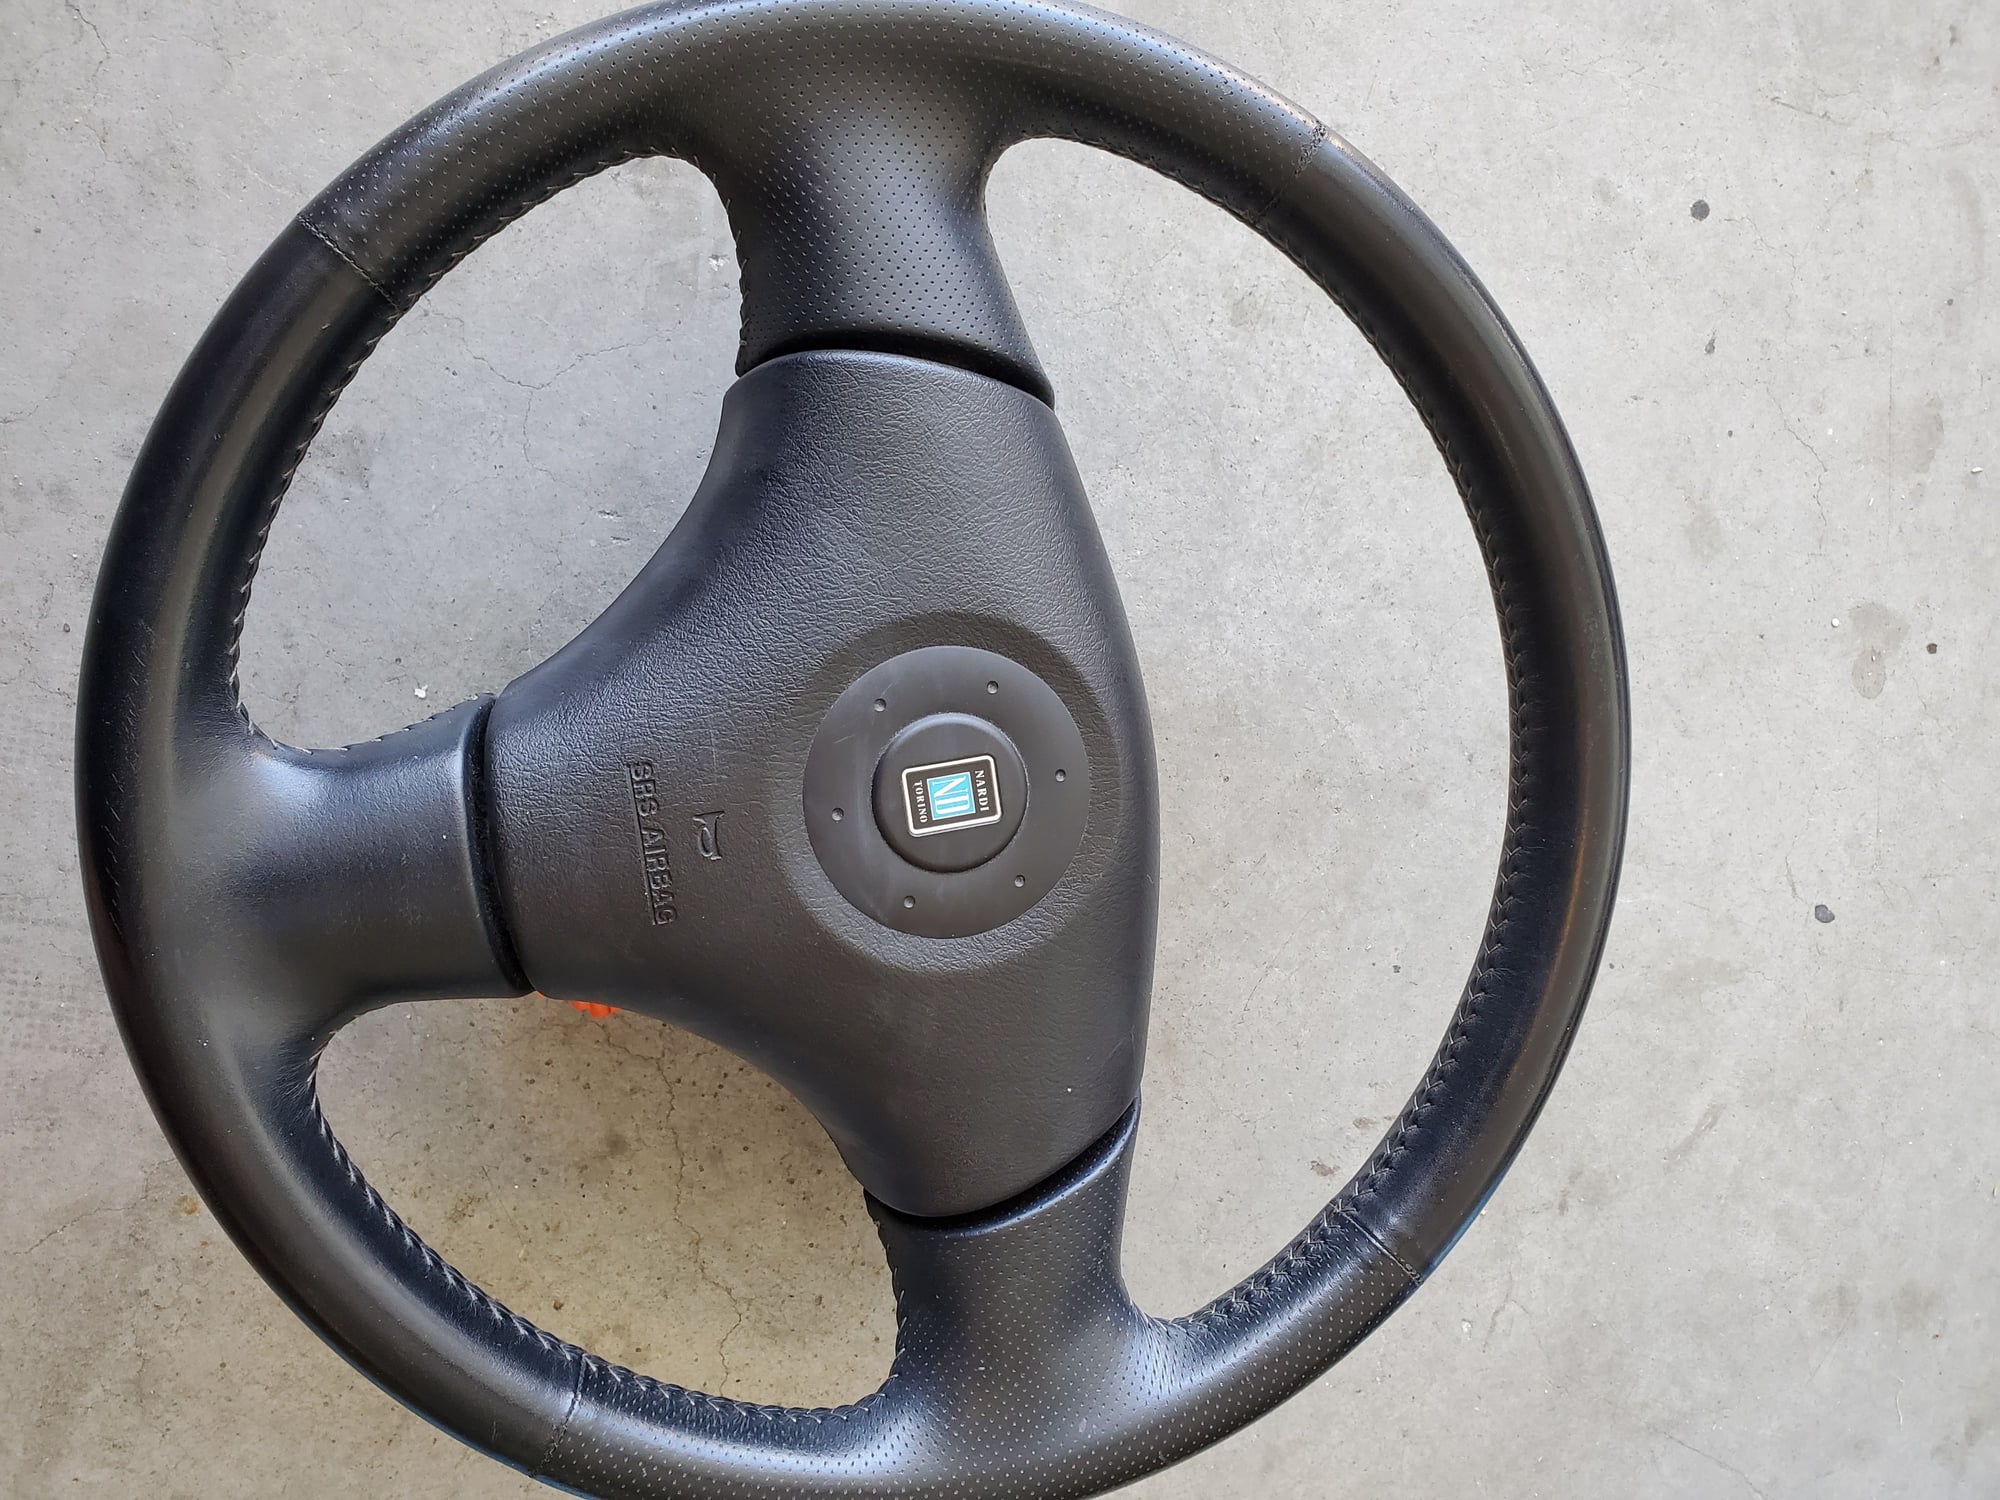 Interior/Upholstery - Nardi steering wheel - Used - 1993 to 1995 Mazda RX-7 - Desert Hot Springs, CA 92240, United States